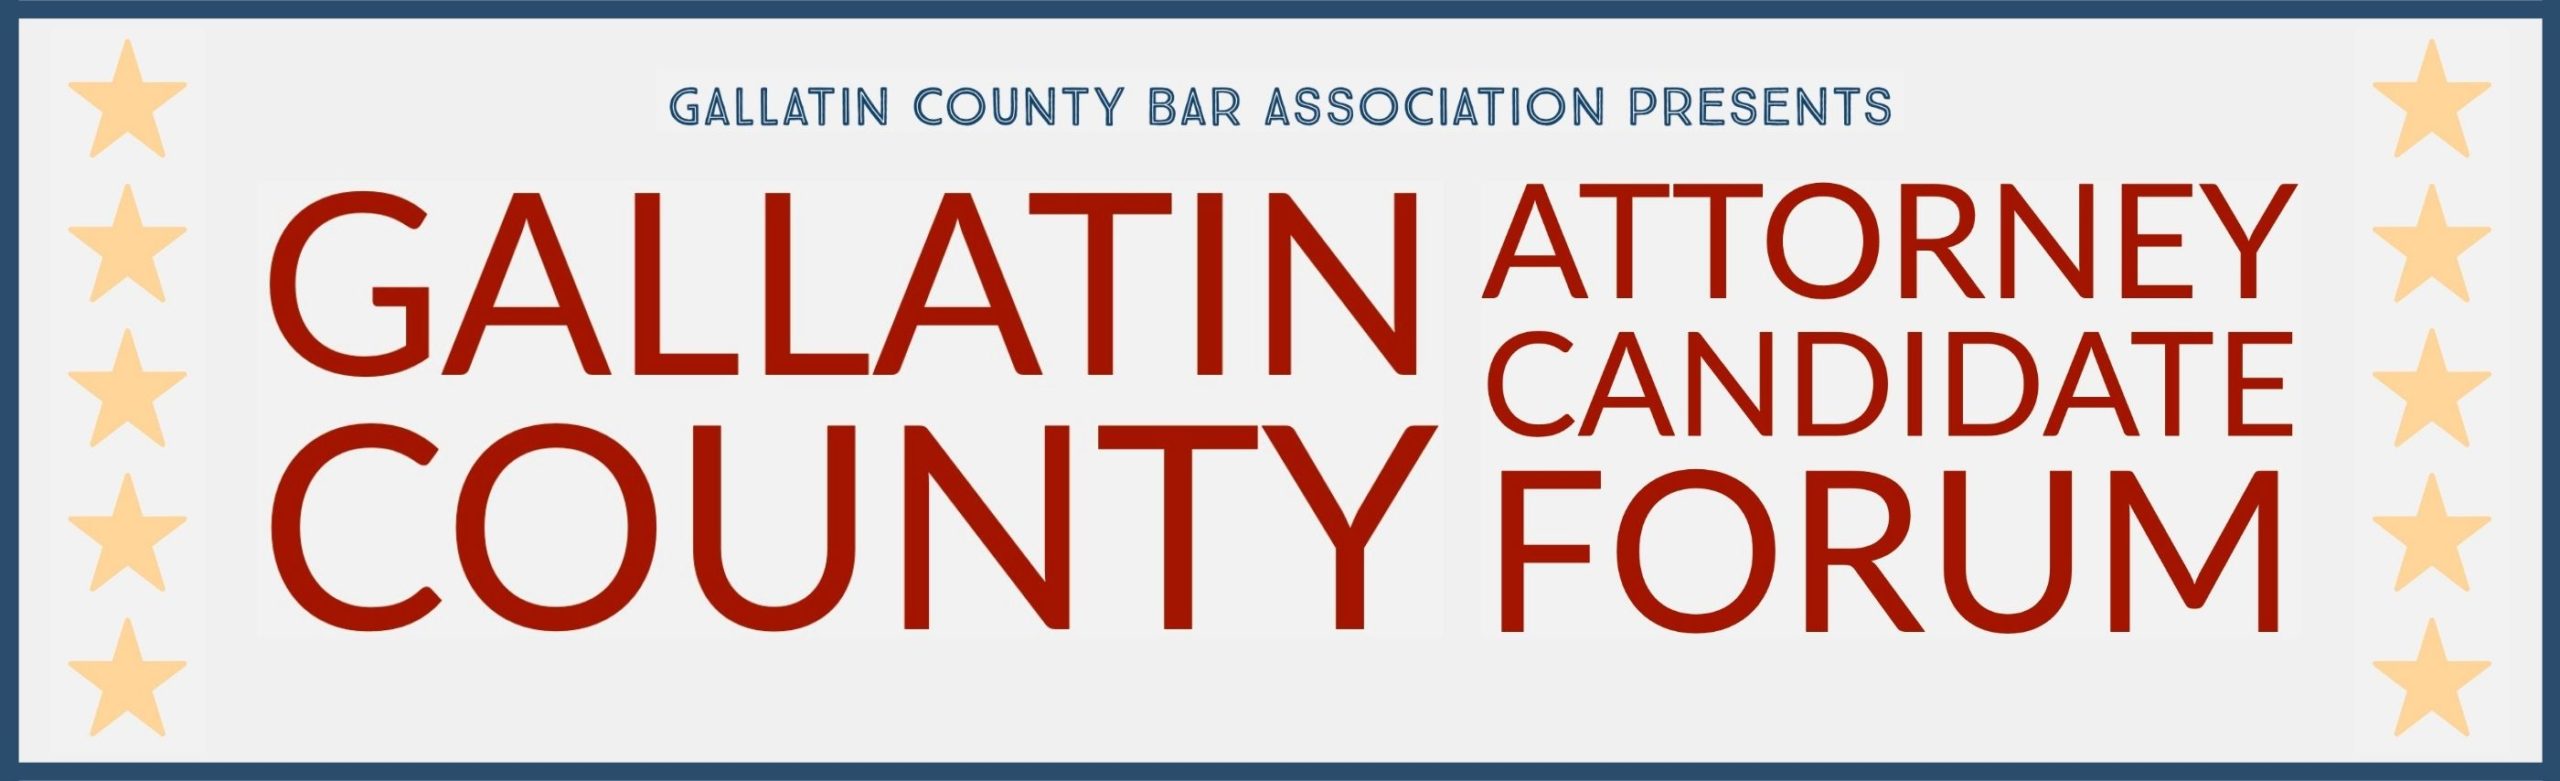 Gallatin County Attorney Candidate Forum